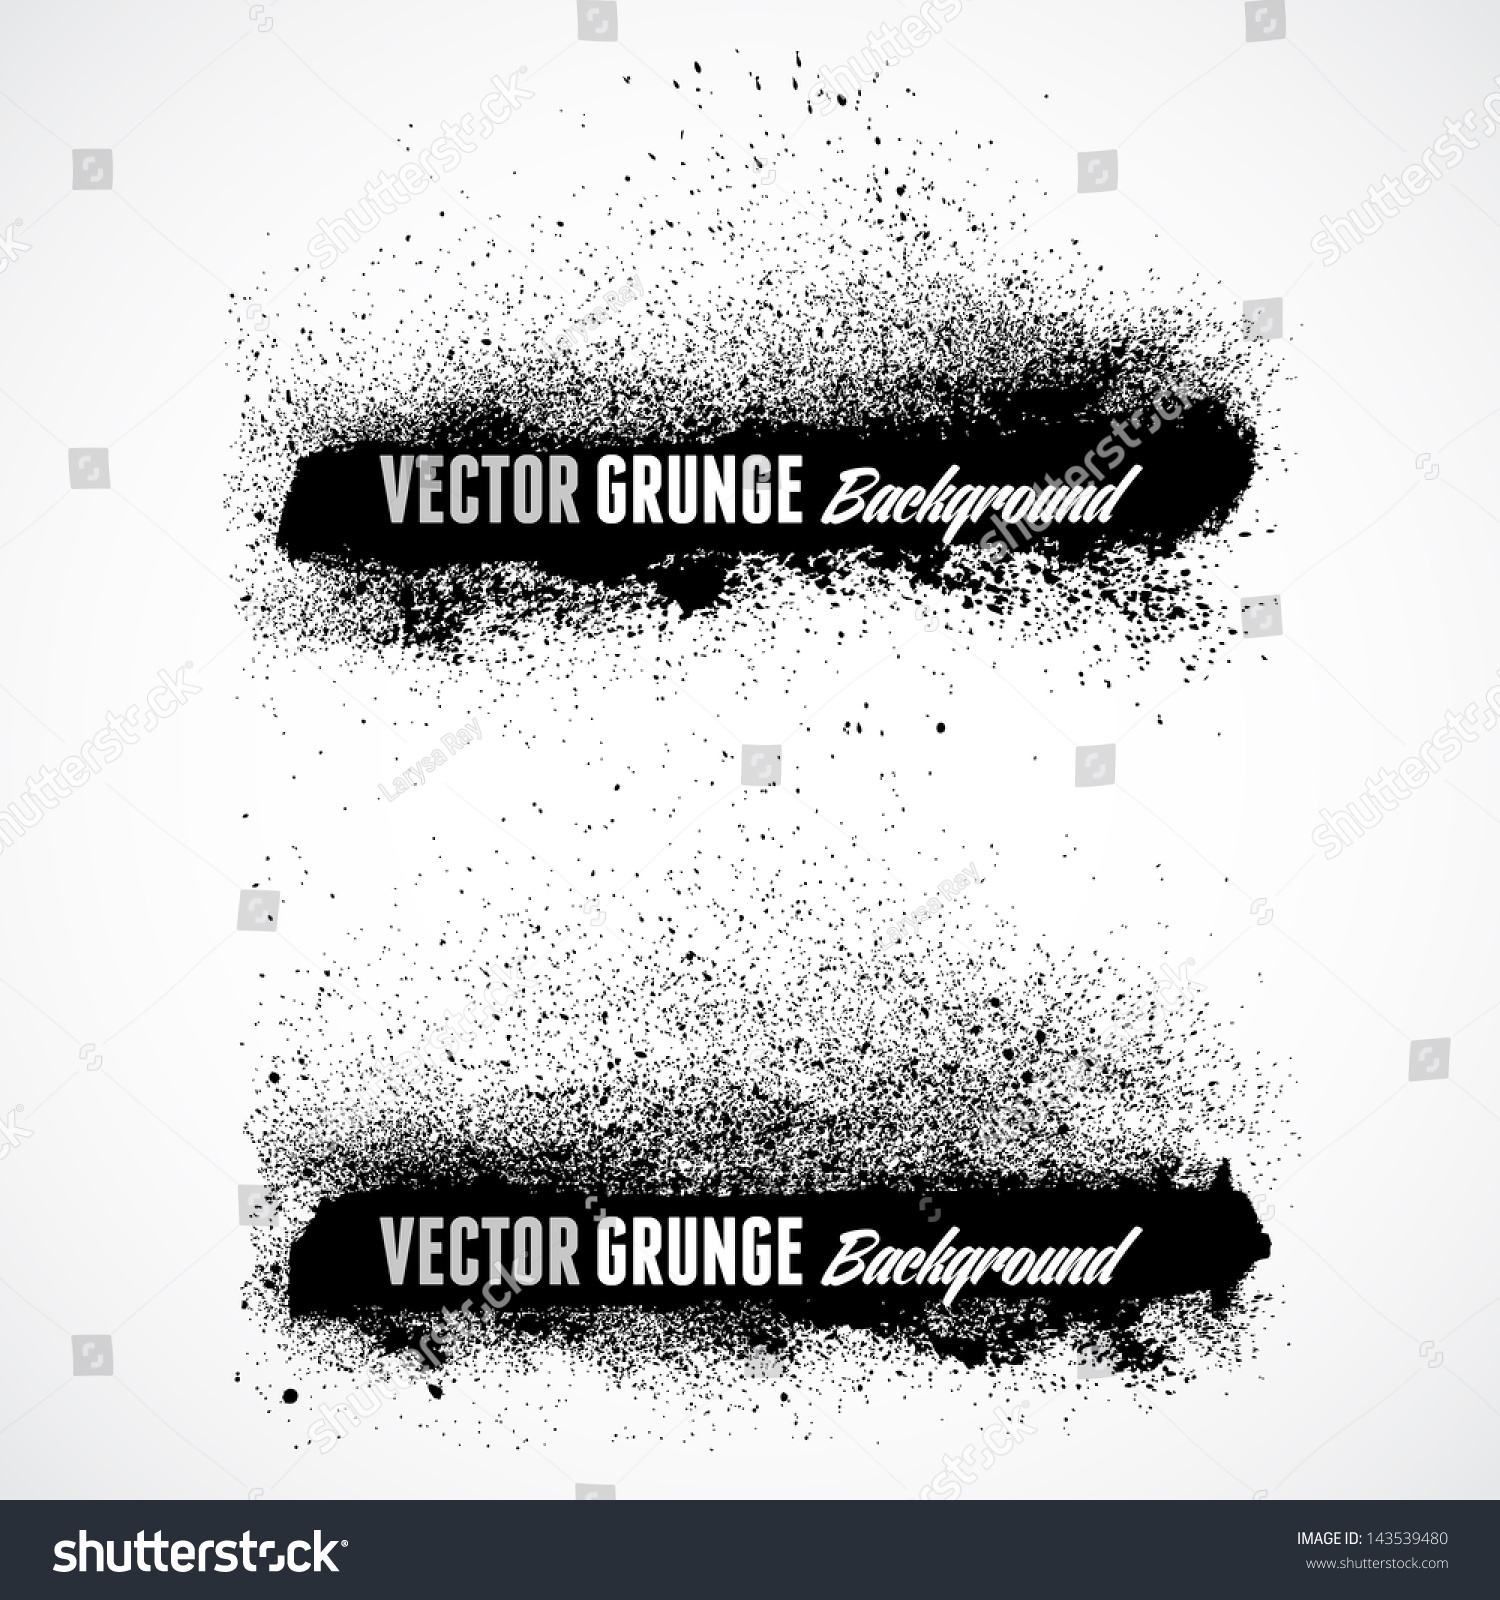 Grunge Banner Backgrounds In Black Color Stock Vector 143539480